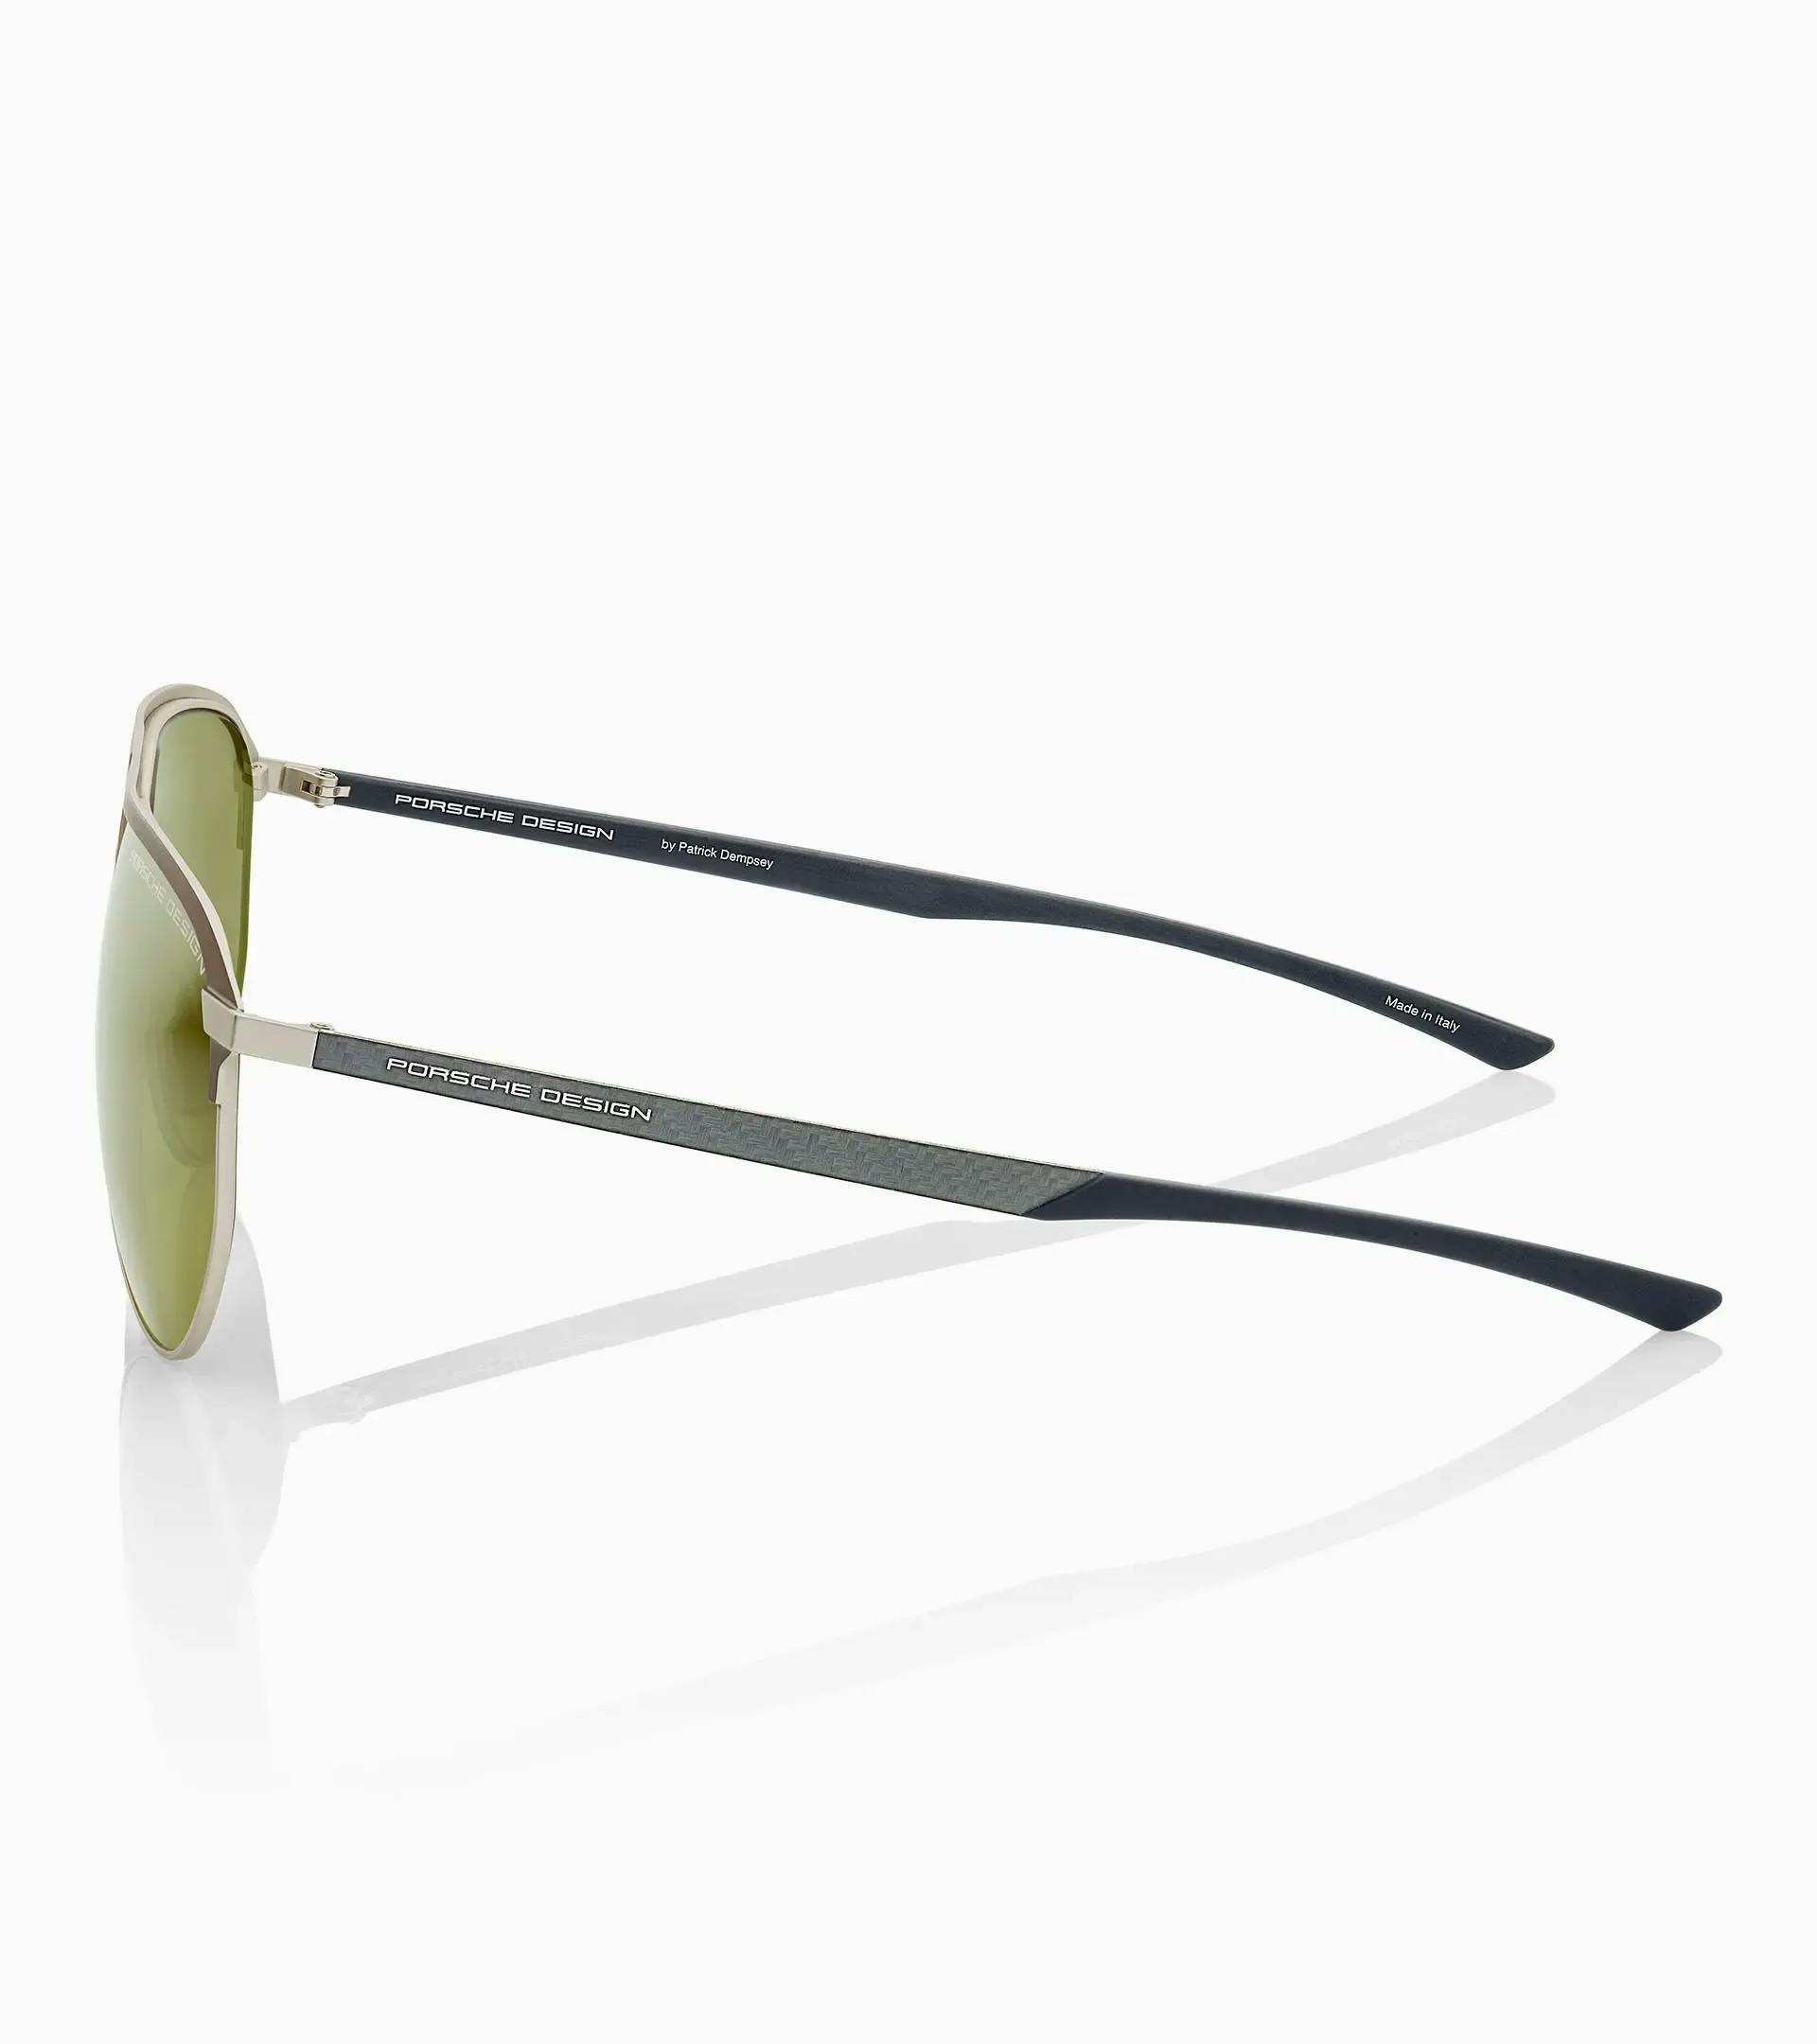 Sunglasses P´8965 Patrick Dempsey Ltd. Edition 2